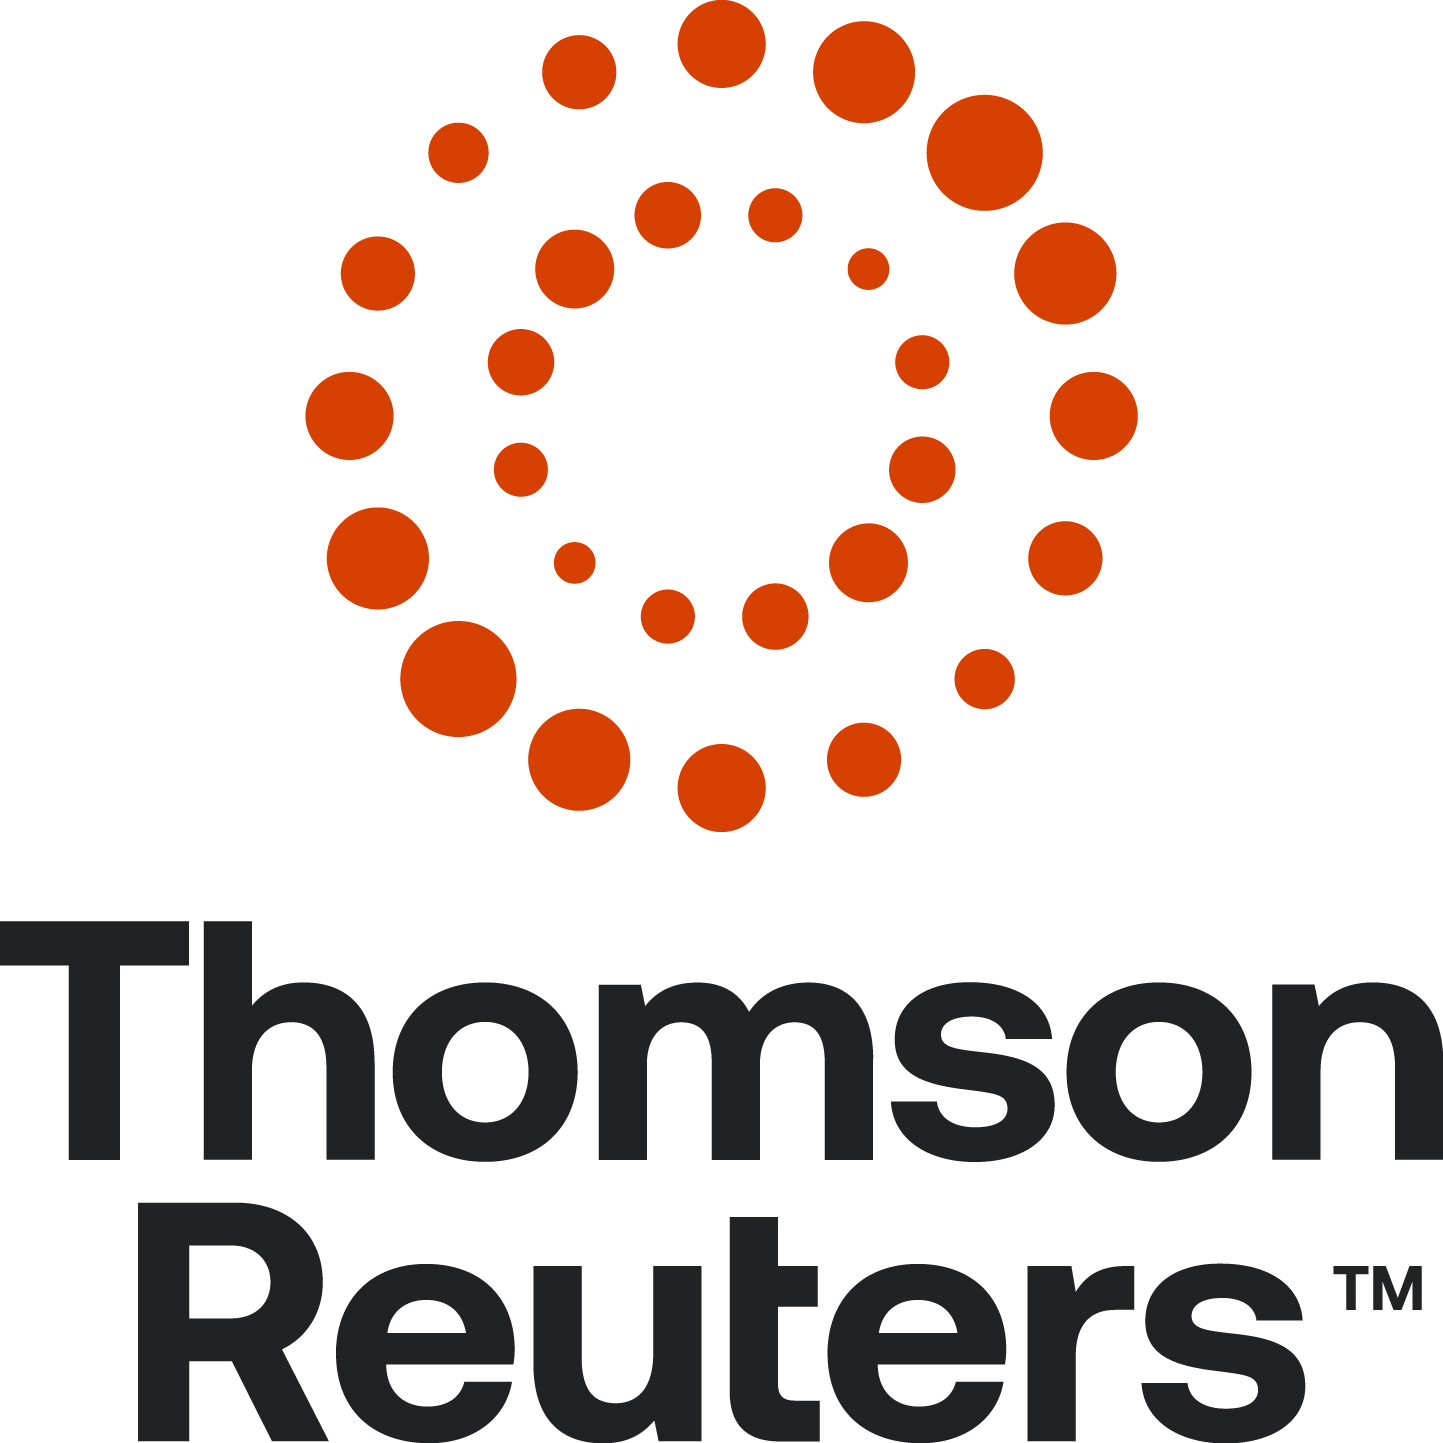 Thomson Reuters (TM)